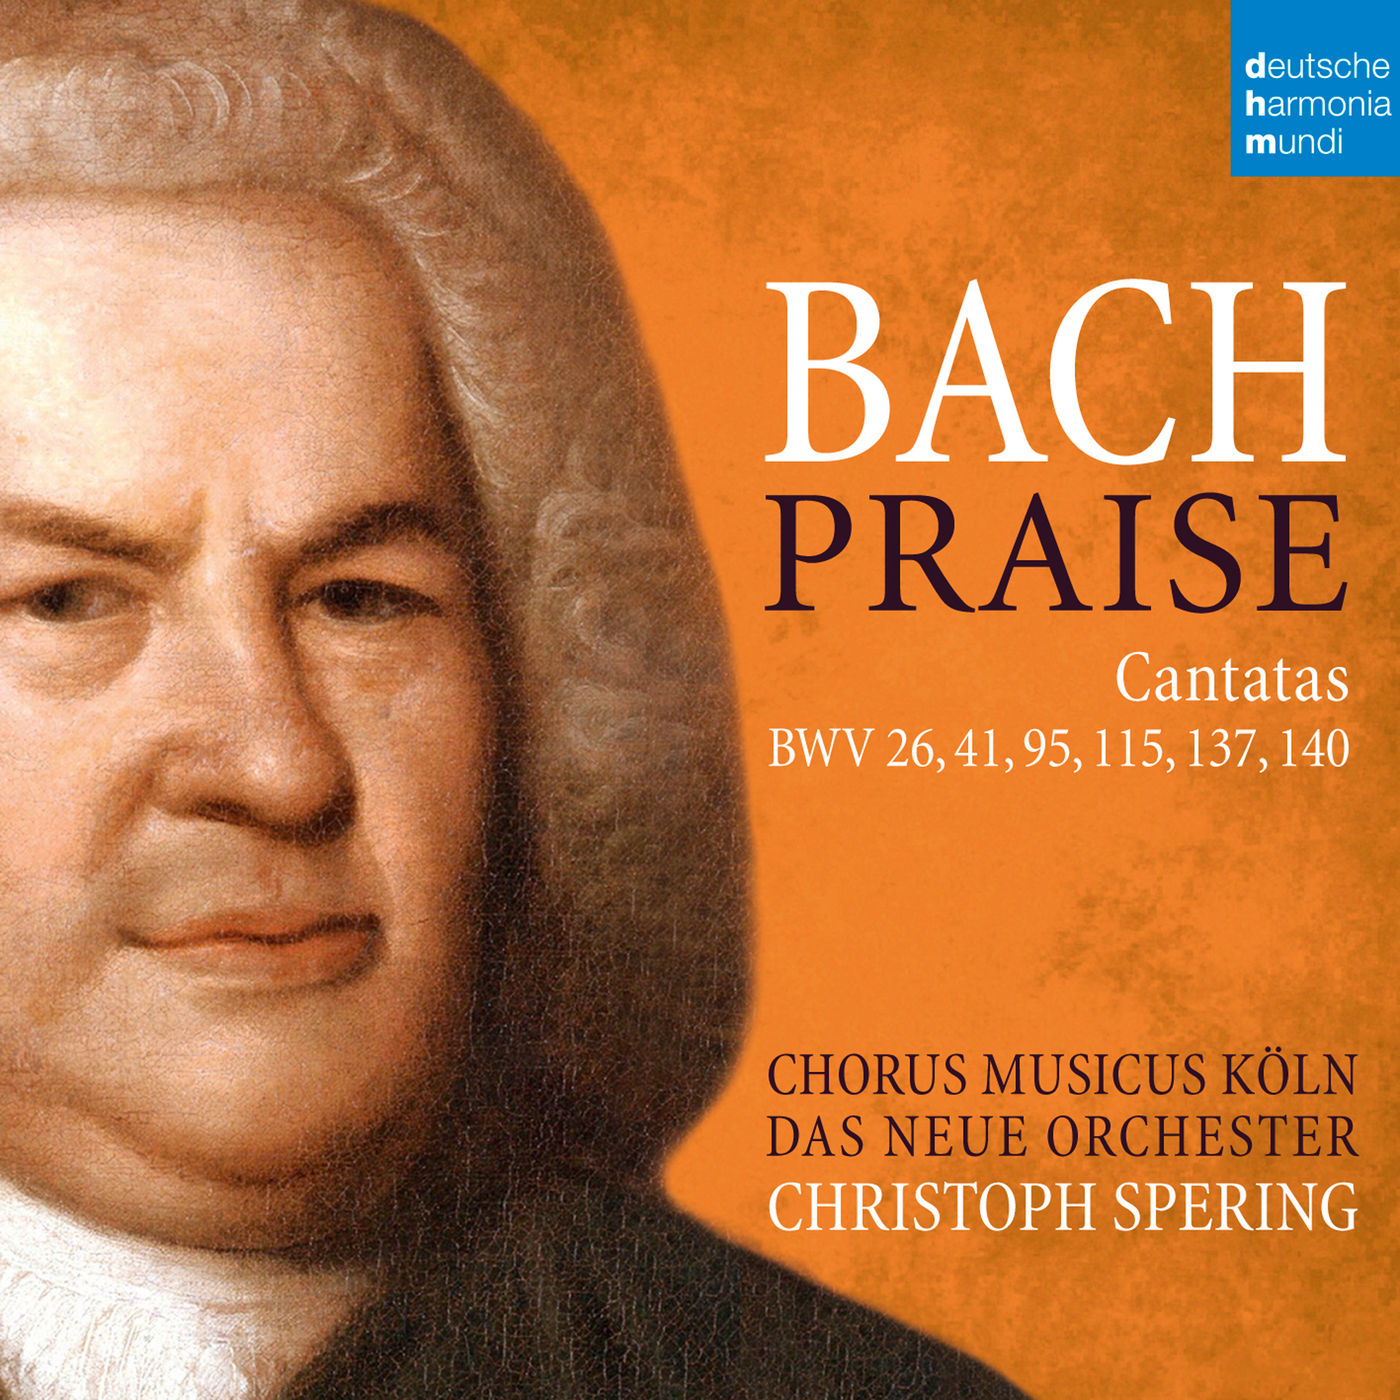 Christoph Spering – Bach: Praise – Cantatas BWV 26, 41, 95, 115, 137, 140 (2020) [FLAC 24bit/48kHz]